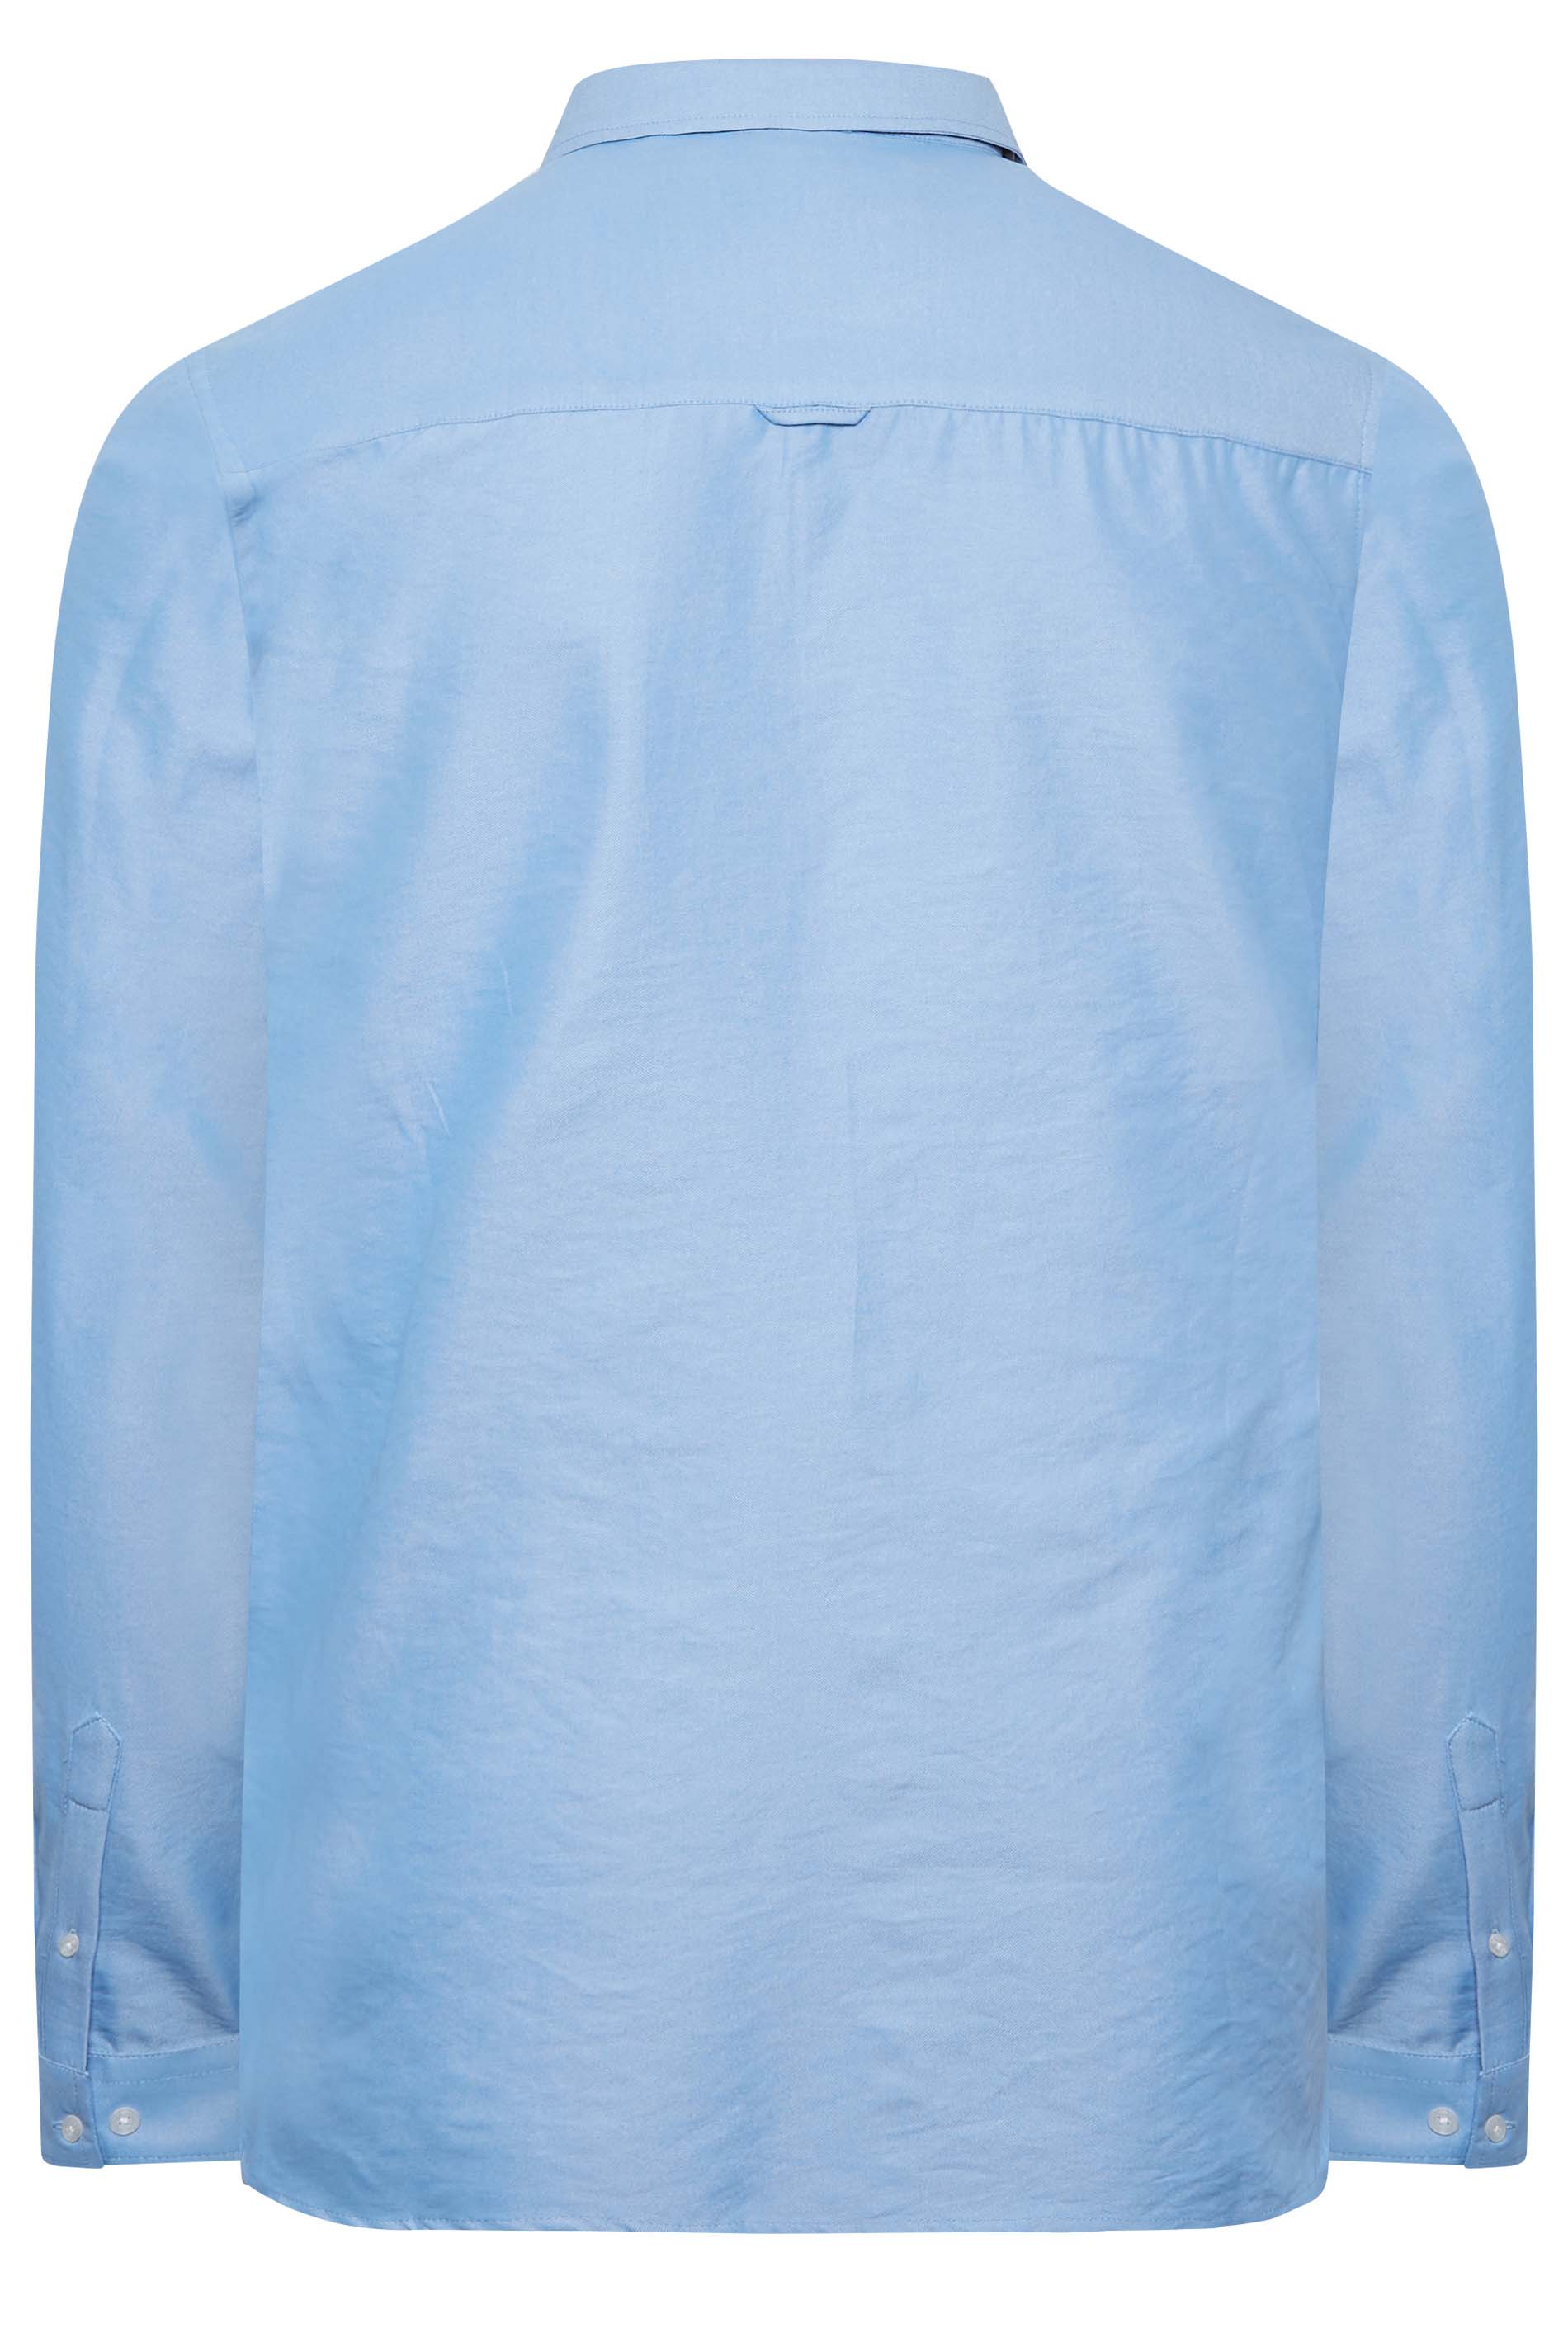 D555 Big & Tall Blue Long Sleeve Oxford Shirt | BadRhino